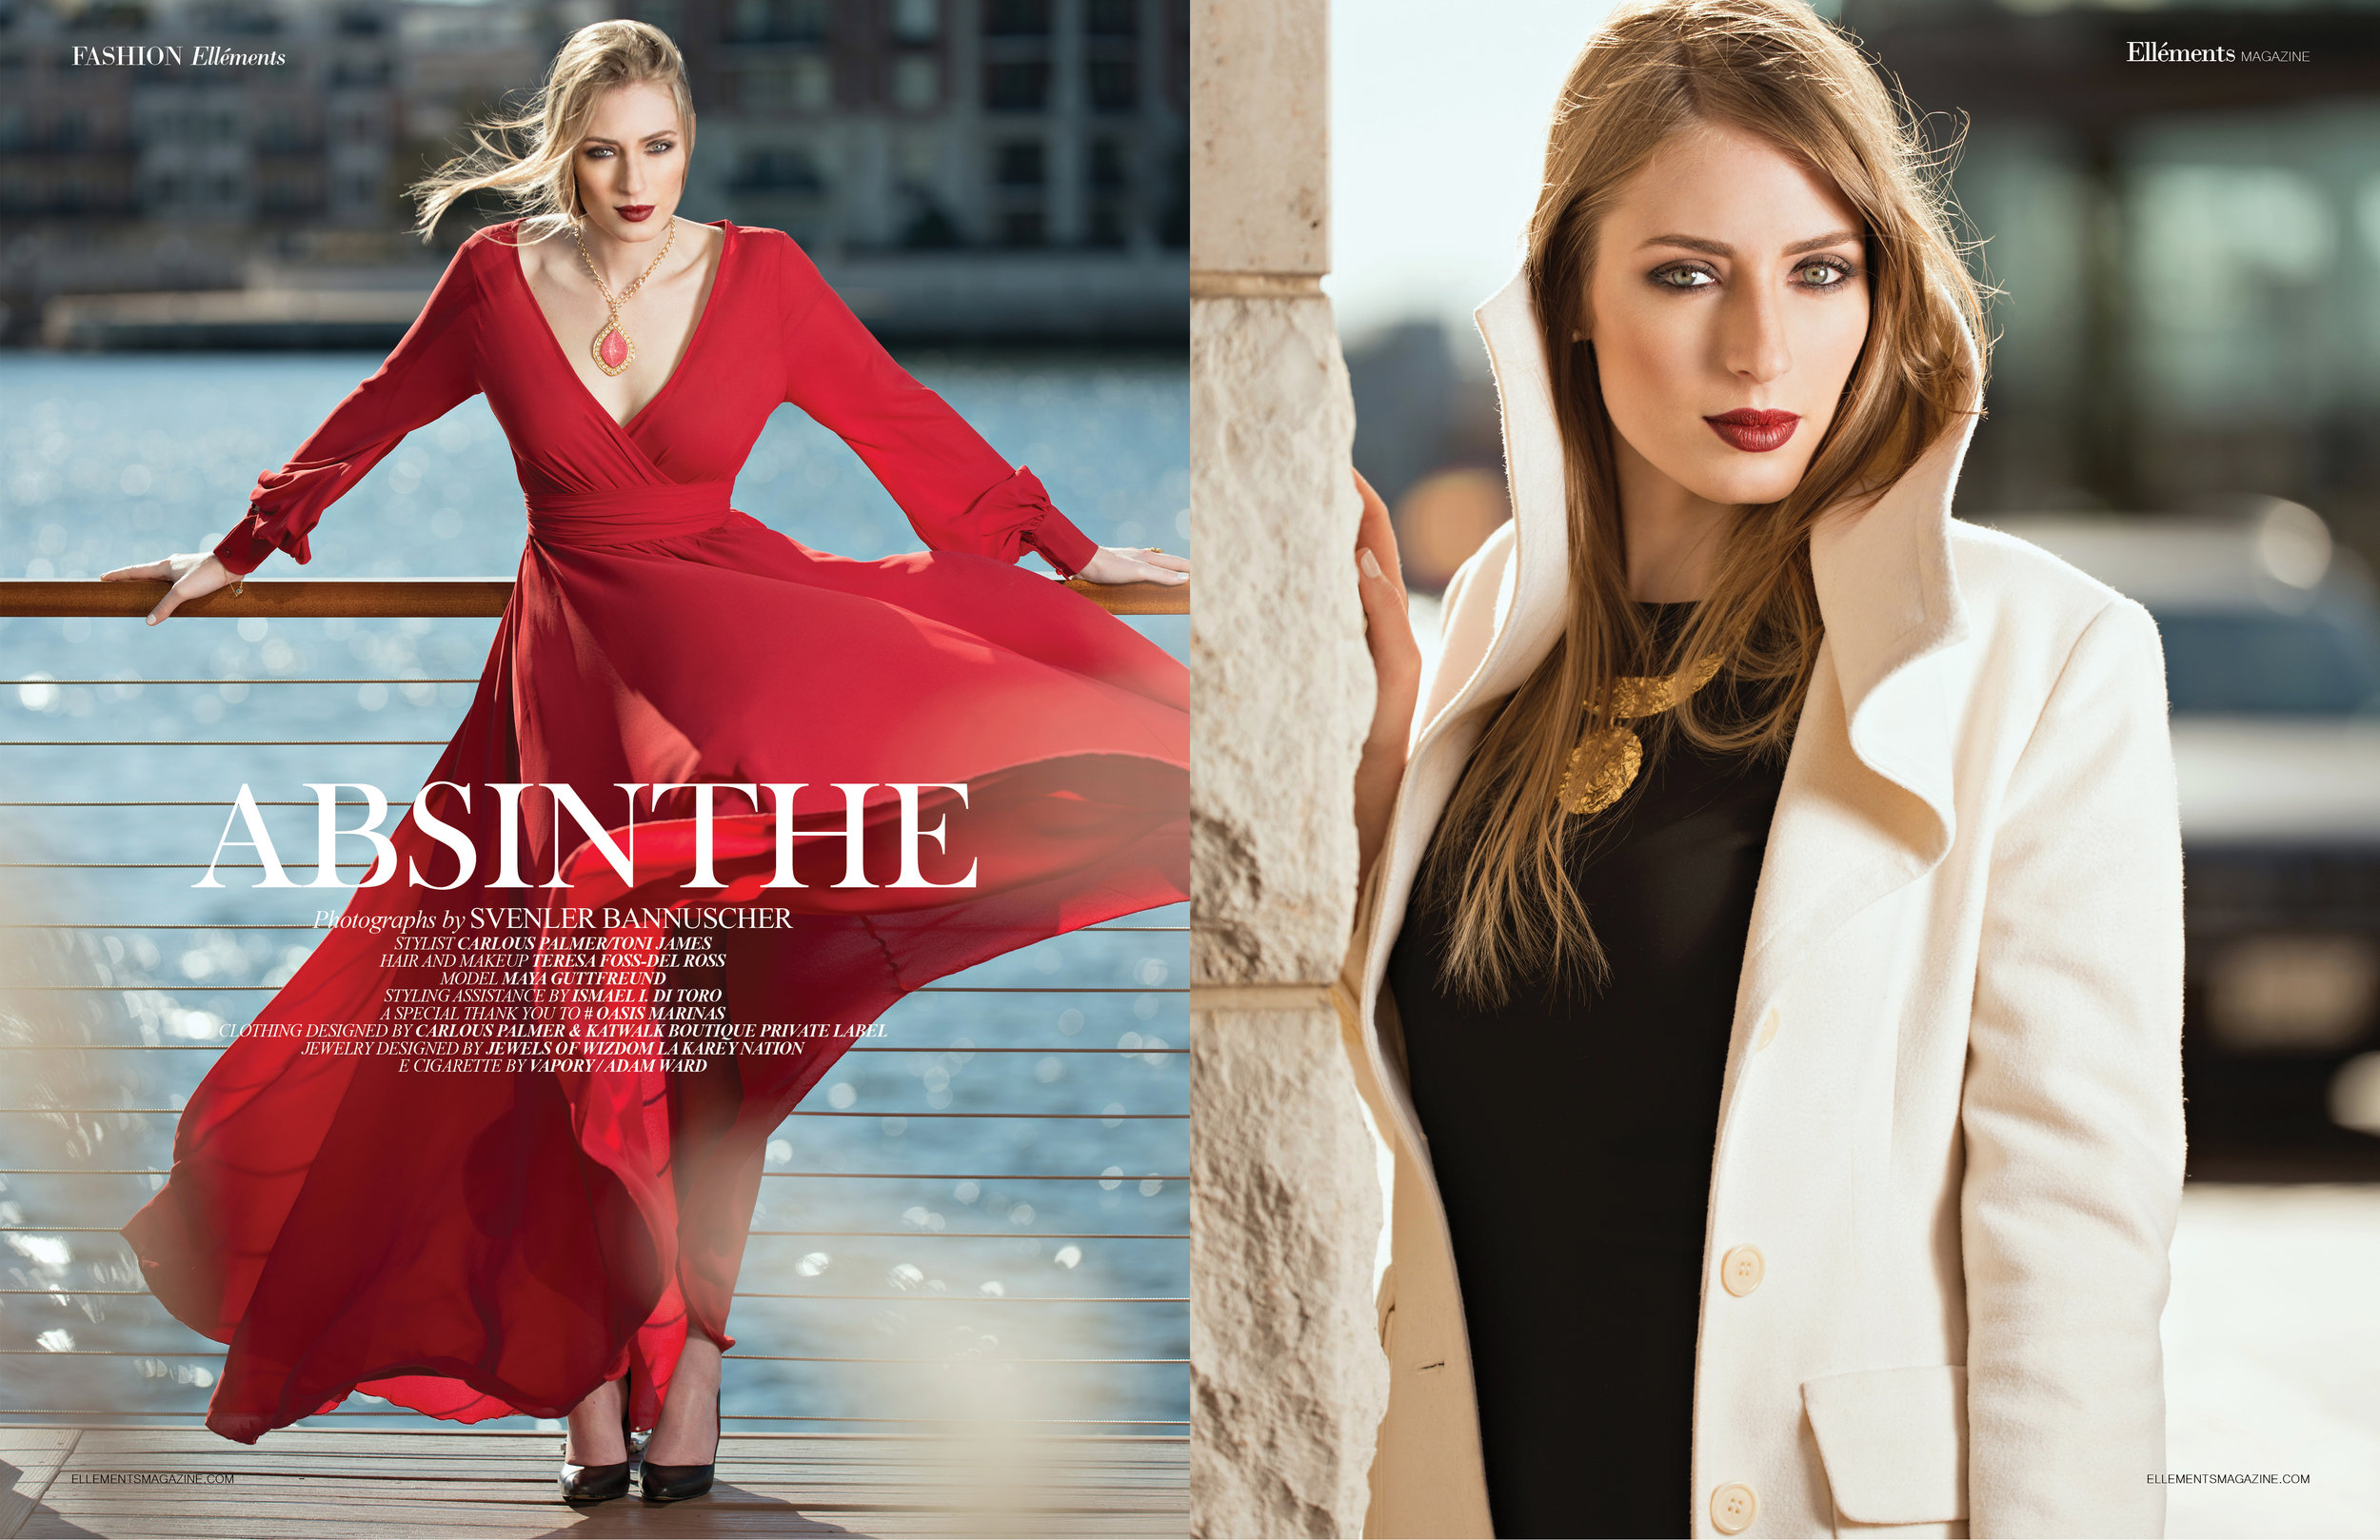 Fashion Editorial for Ellements Magazine by Sven Bannuscher